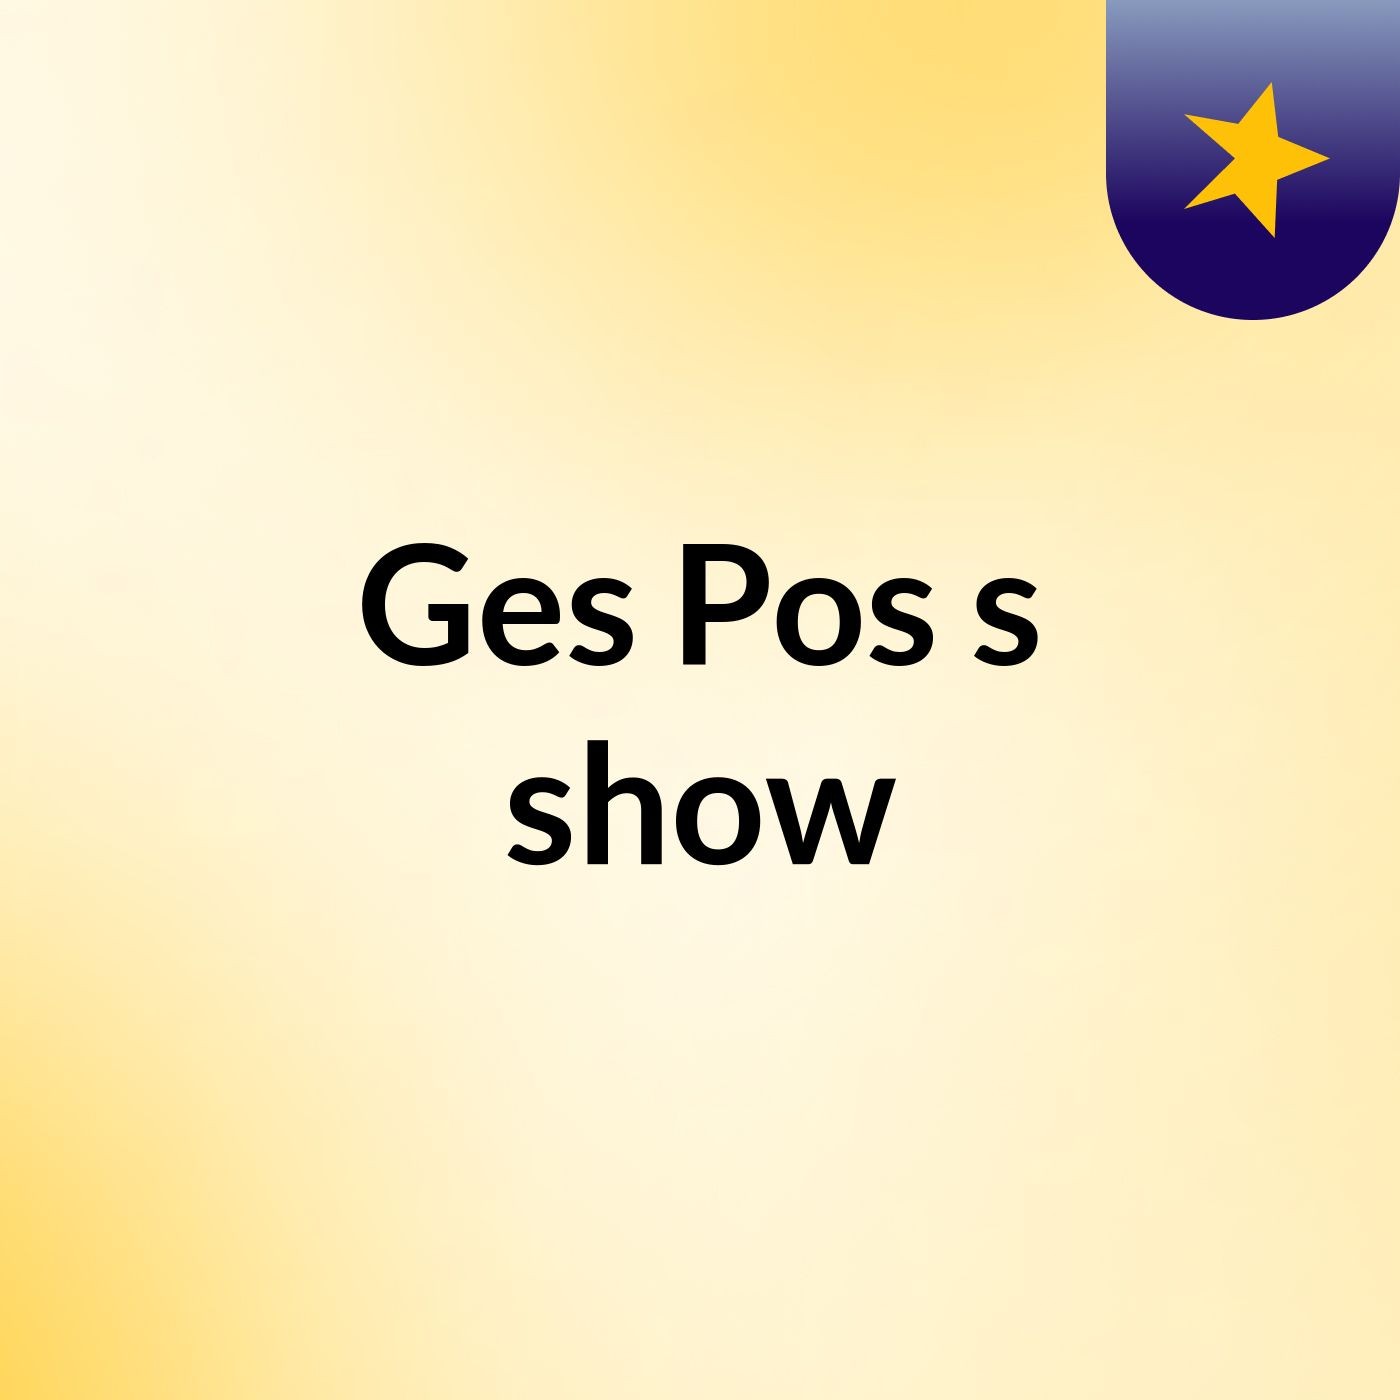 Ges Pos's show